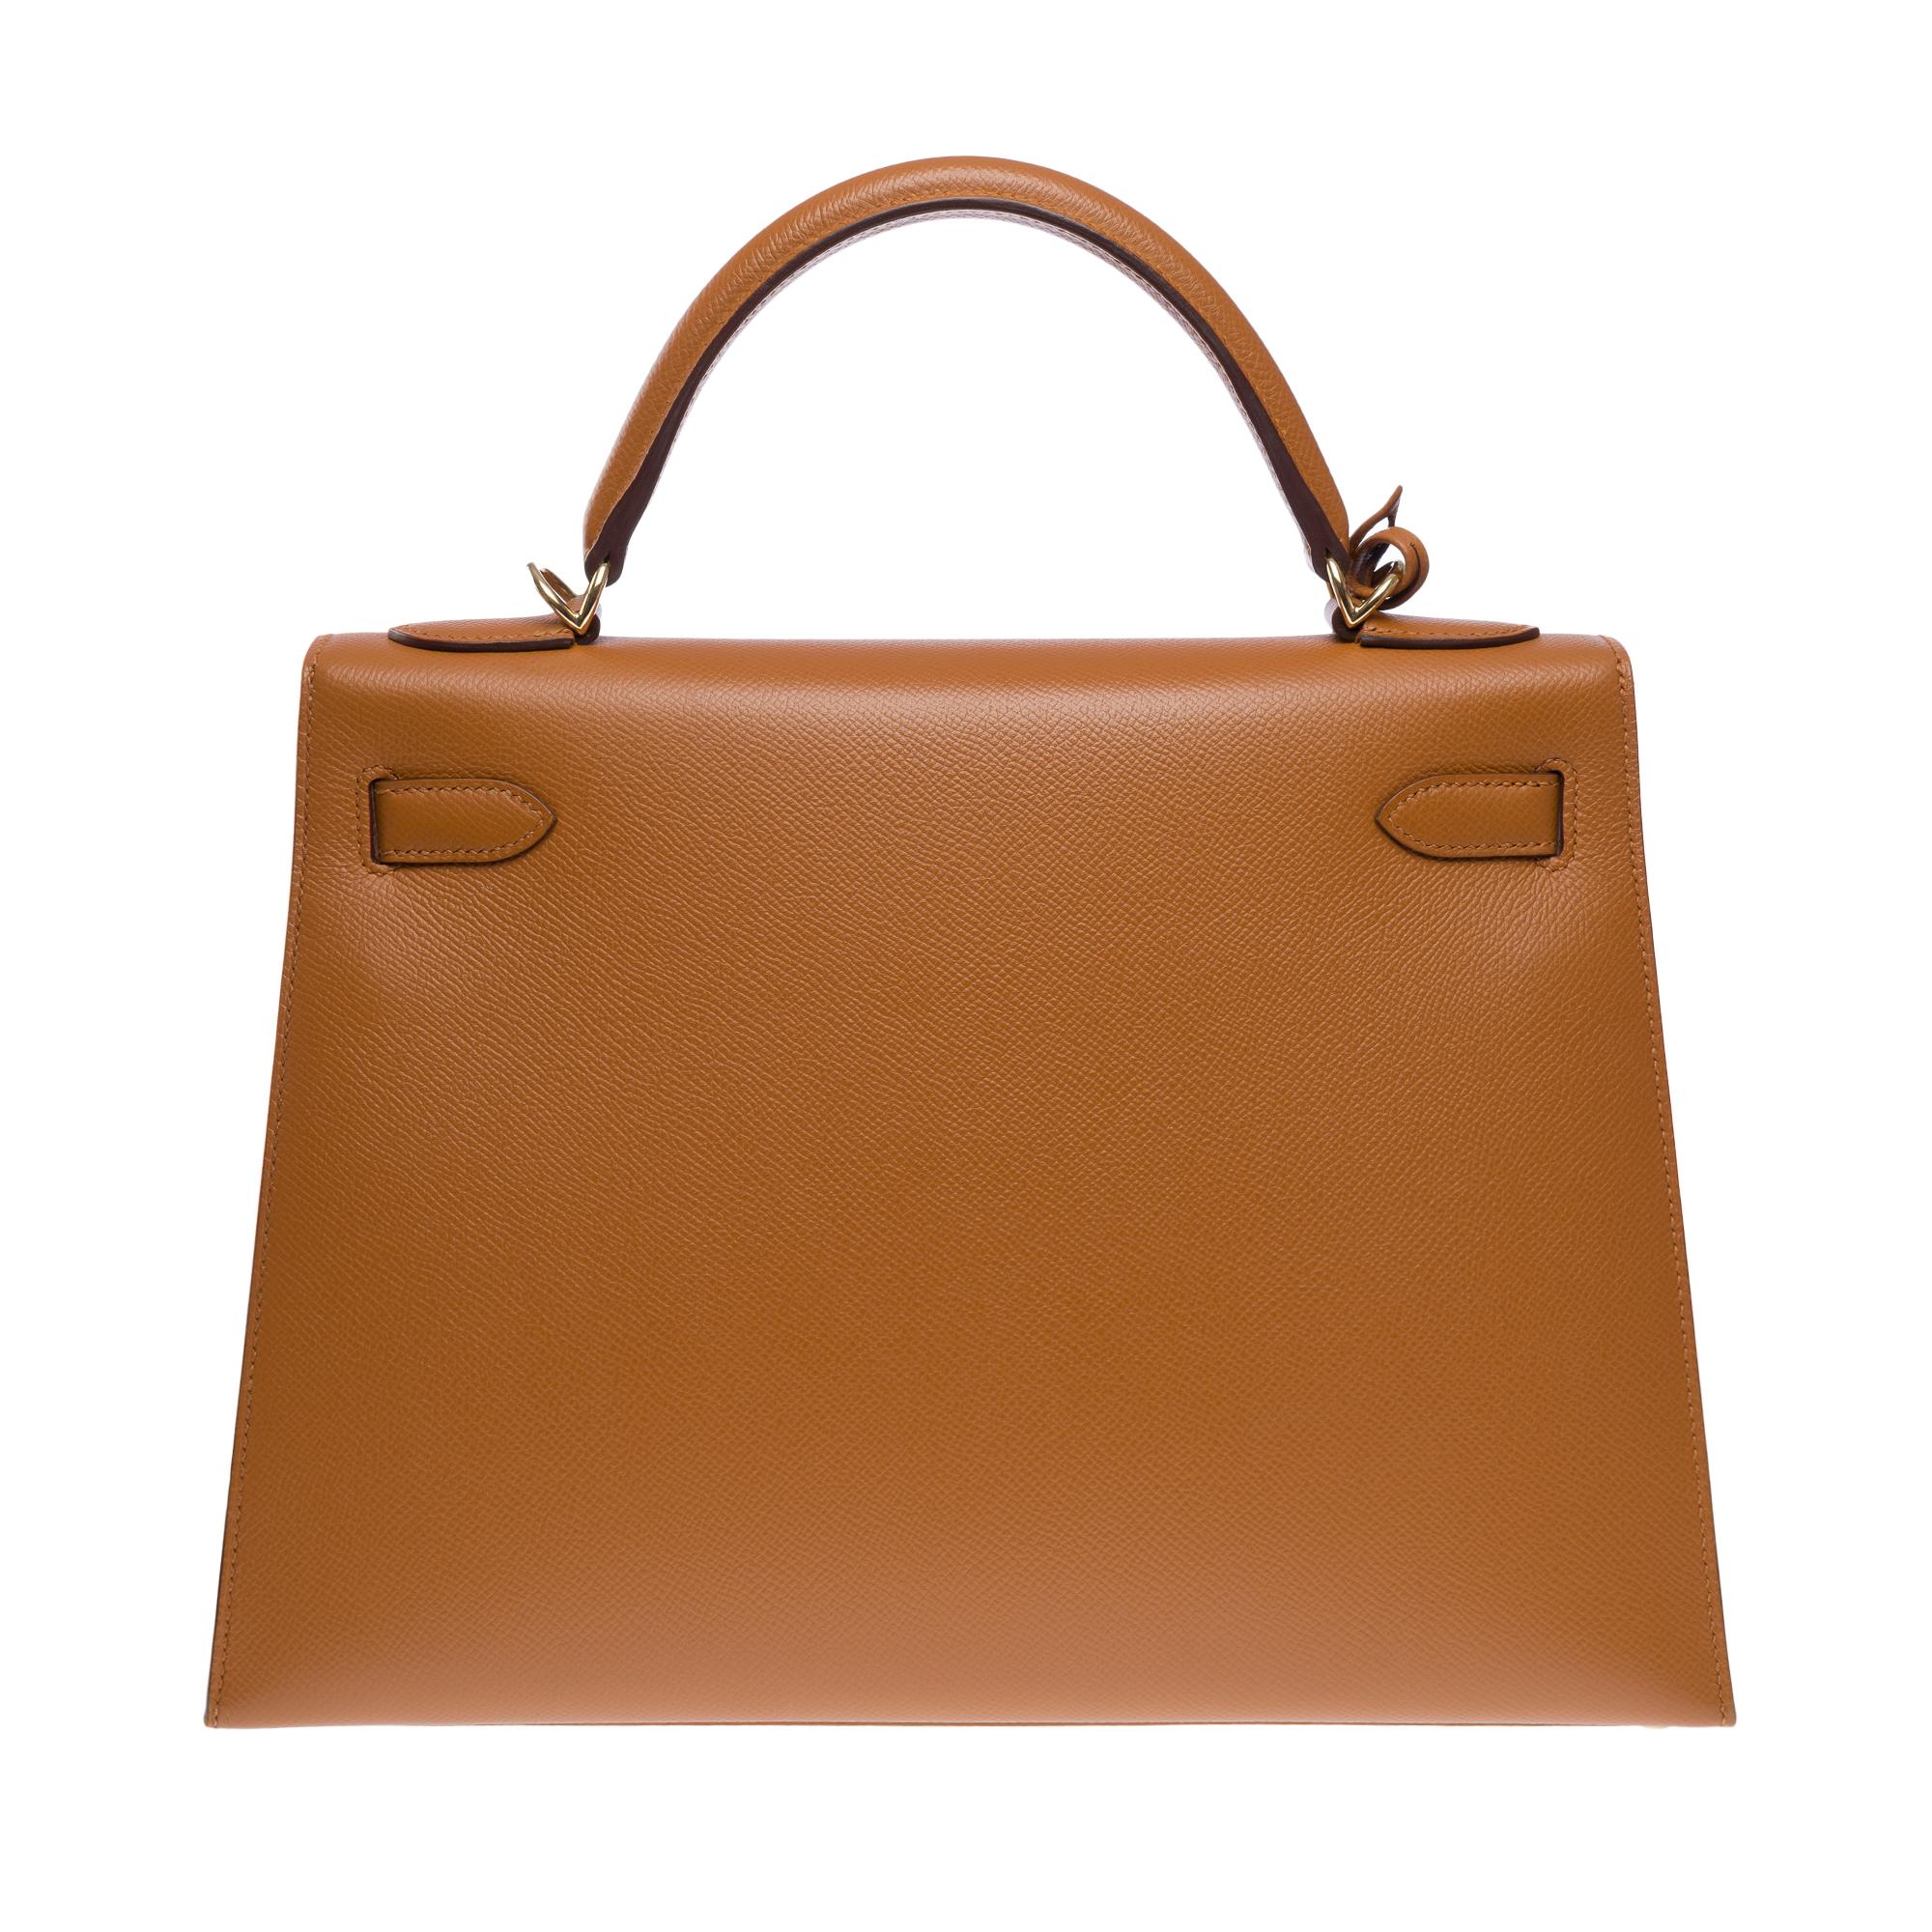 Women's Hermès Kelly 32 sellier handbag strap (HSO) in Camel & Orange Epsom leather, GHW For Sale